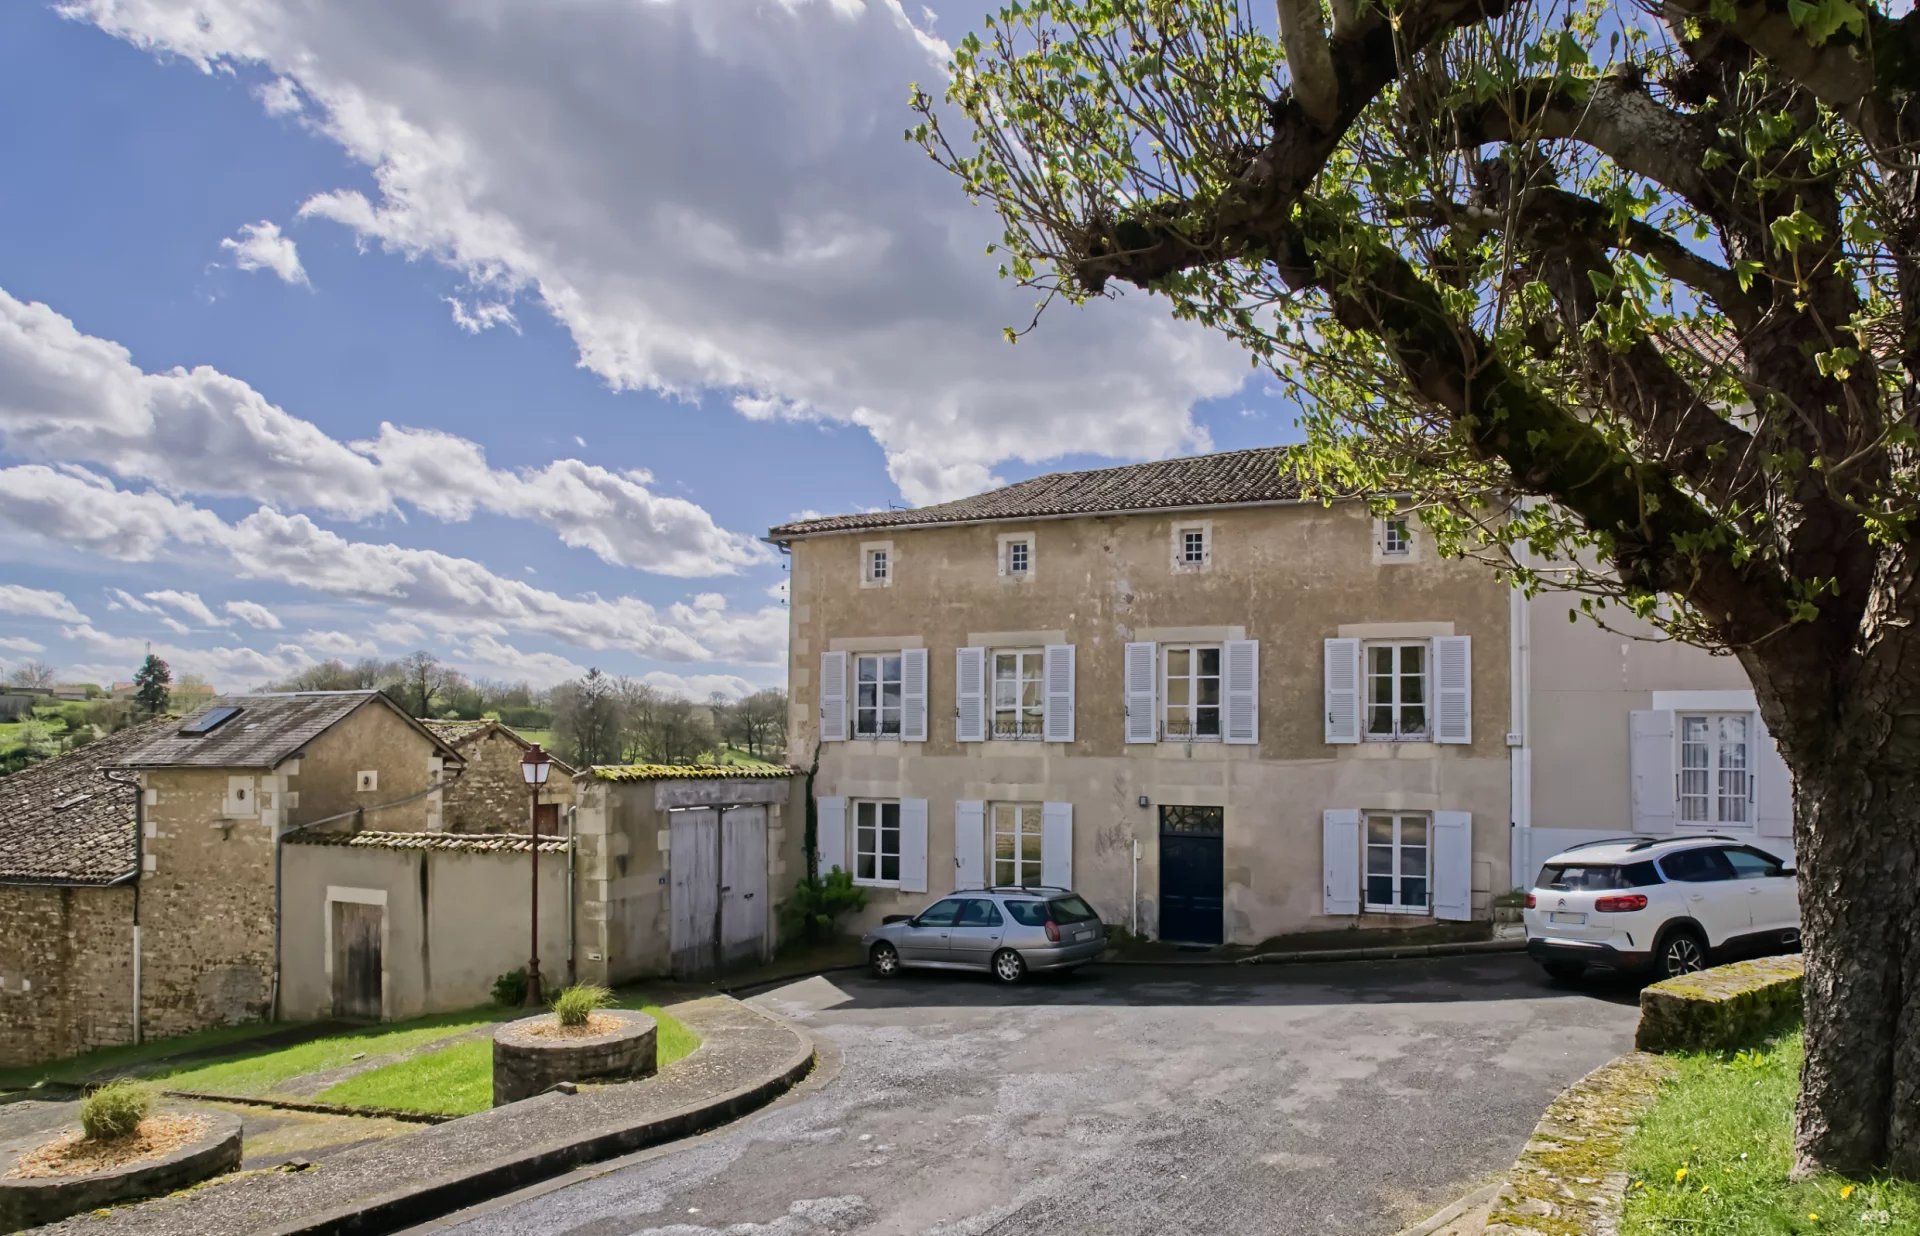 Beautiful Maison de Maître, 6 bedrooms, 1 bed guest cottage, in the heart of Charroux